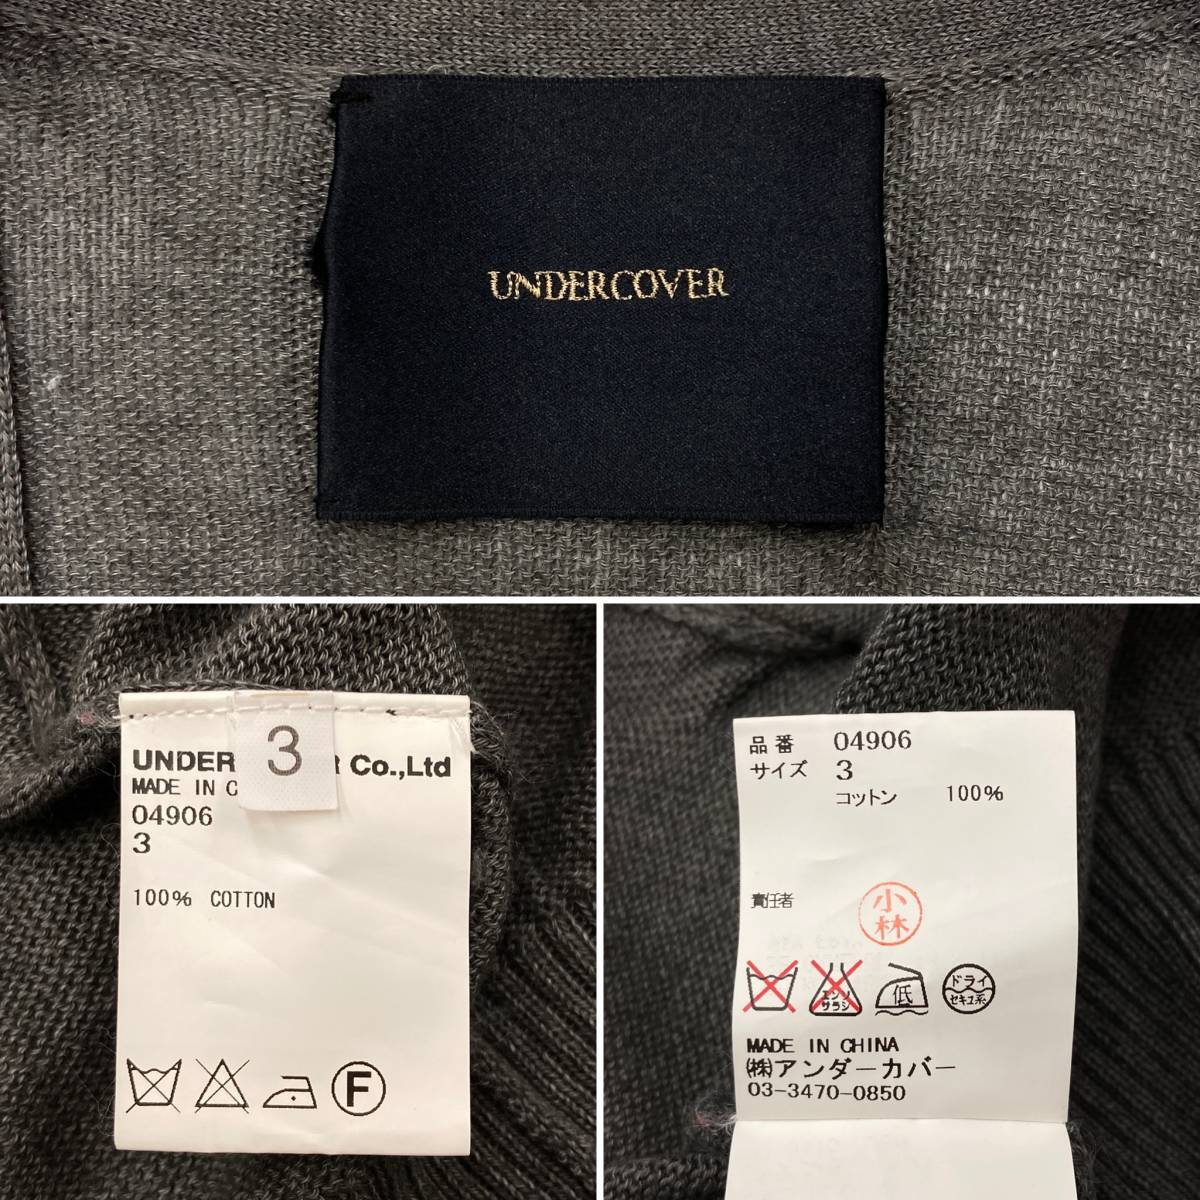 UNDERCOVER CHAOS длинный длина хлопок вязаный кардиган серый 3 размер undercover Chaos свитер мульти- кнопка archive 1132